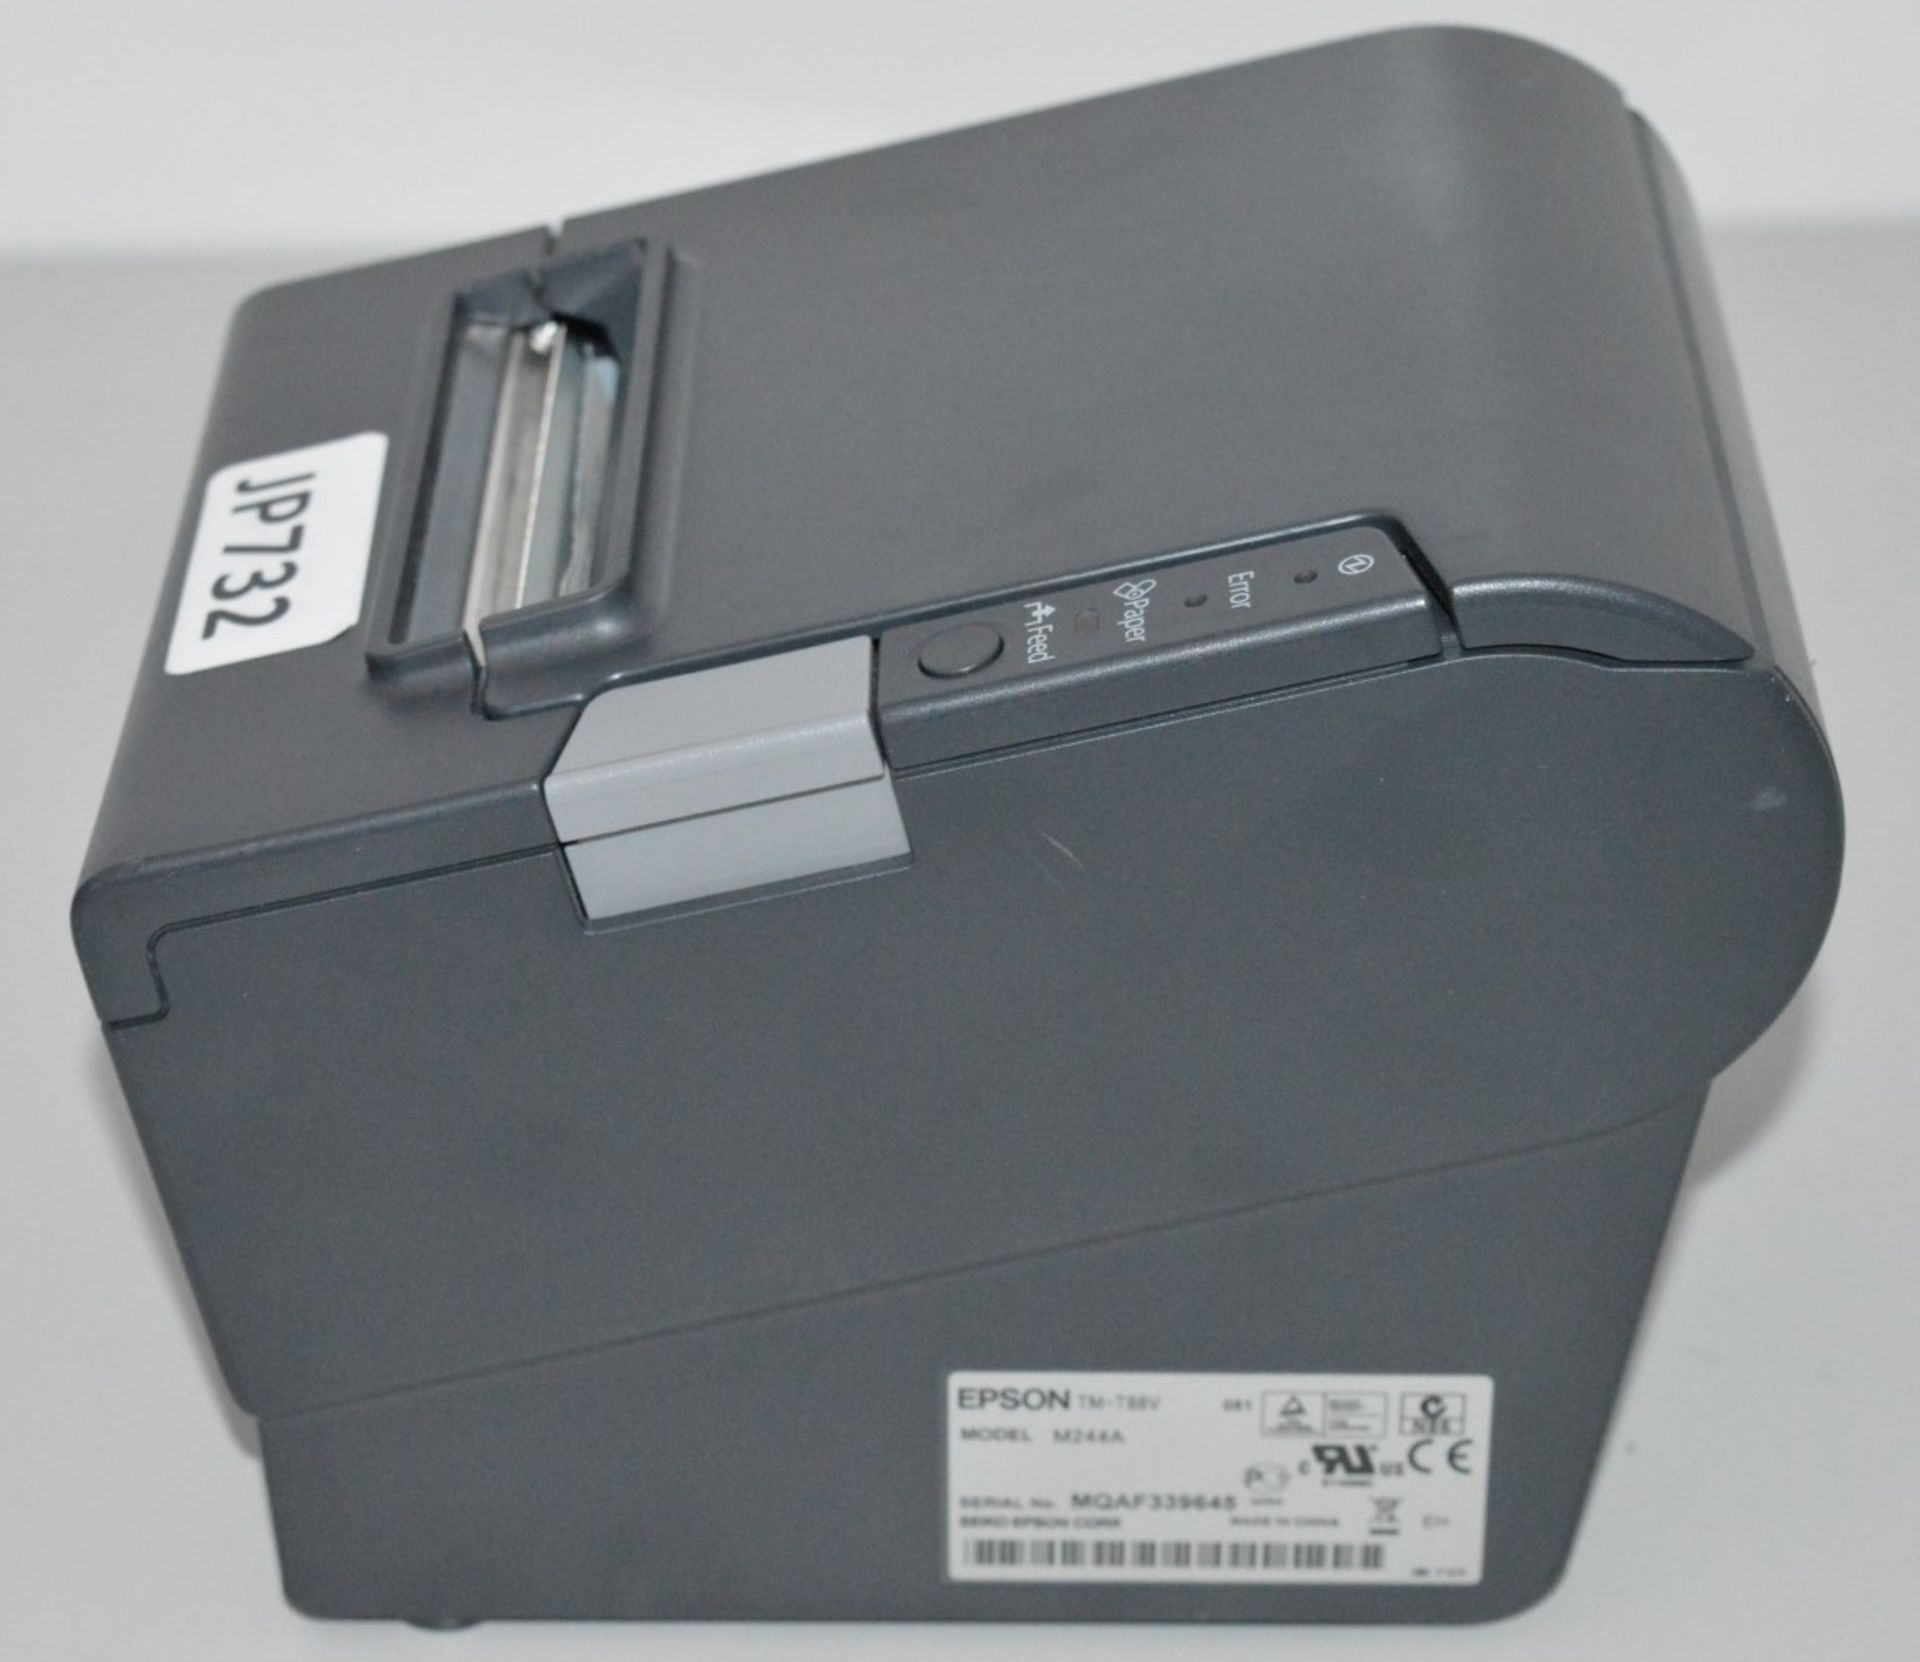 1 x Epson TM-T88V Receipt Printer - CL285 - Ref JP732 - Location: Altincham WA14 - Image 2 of 4